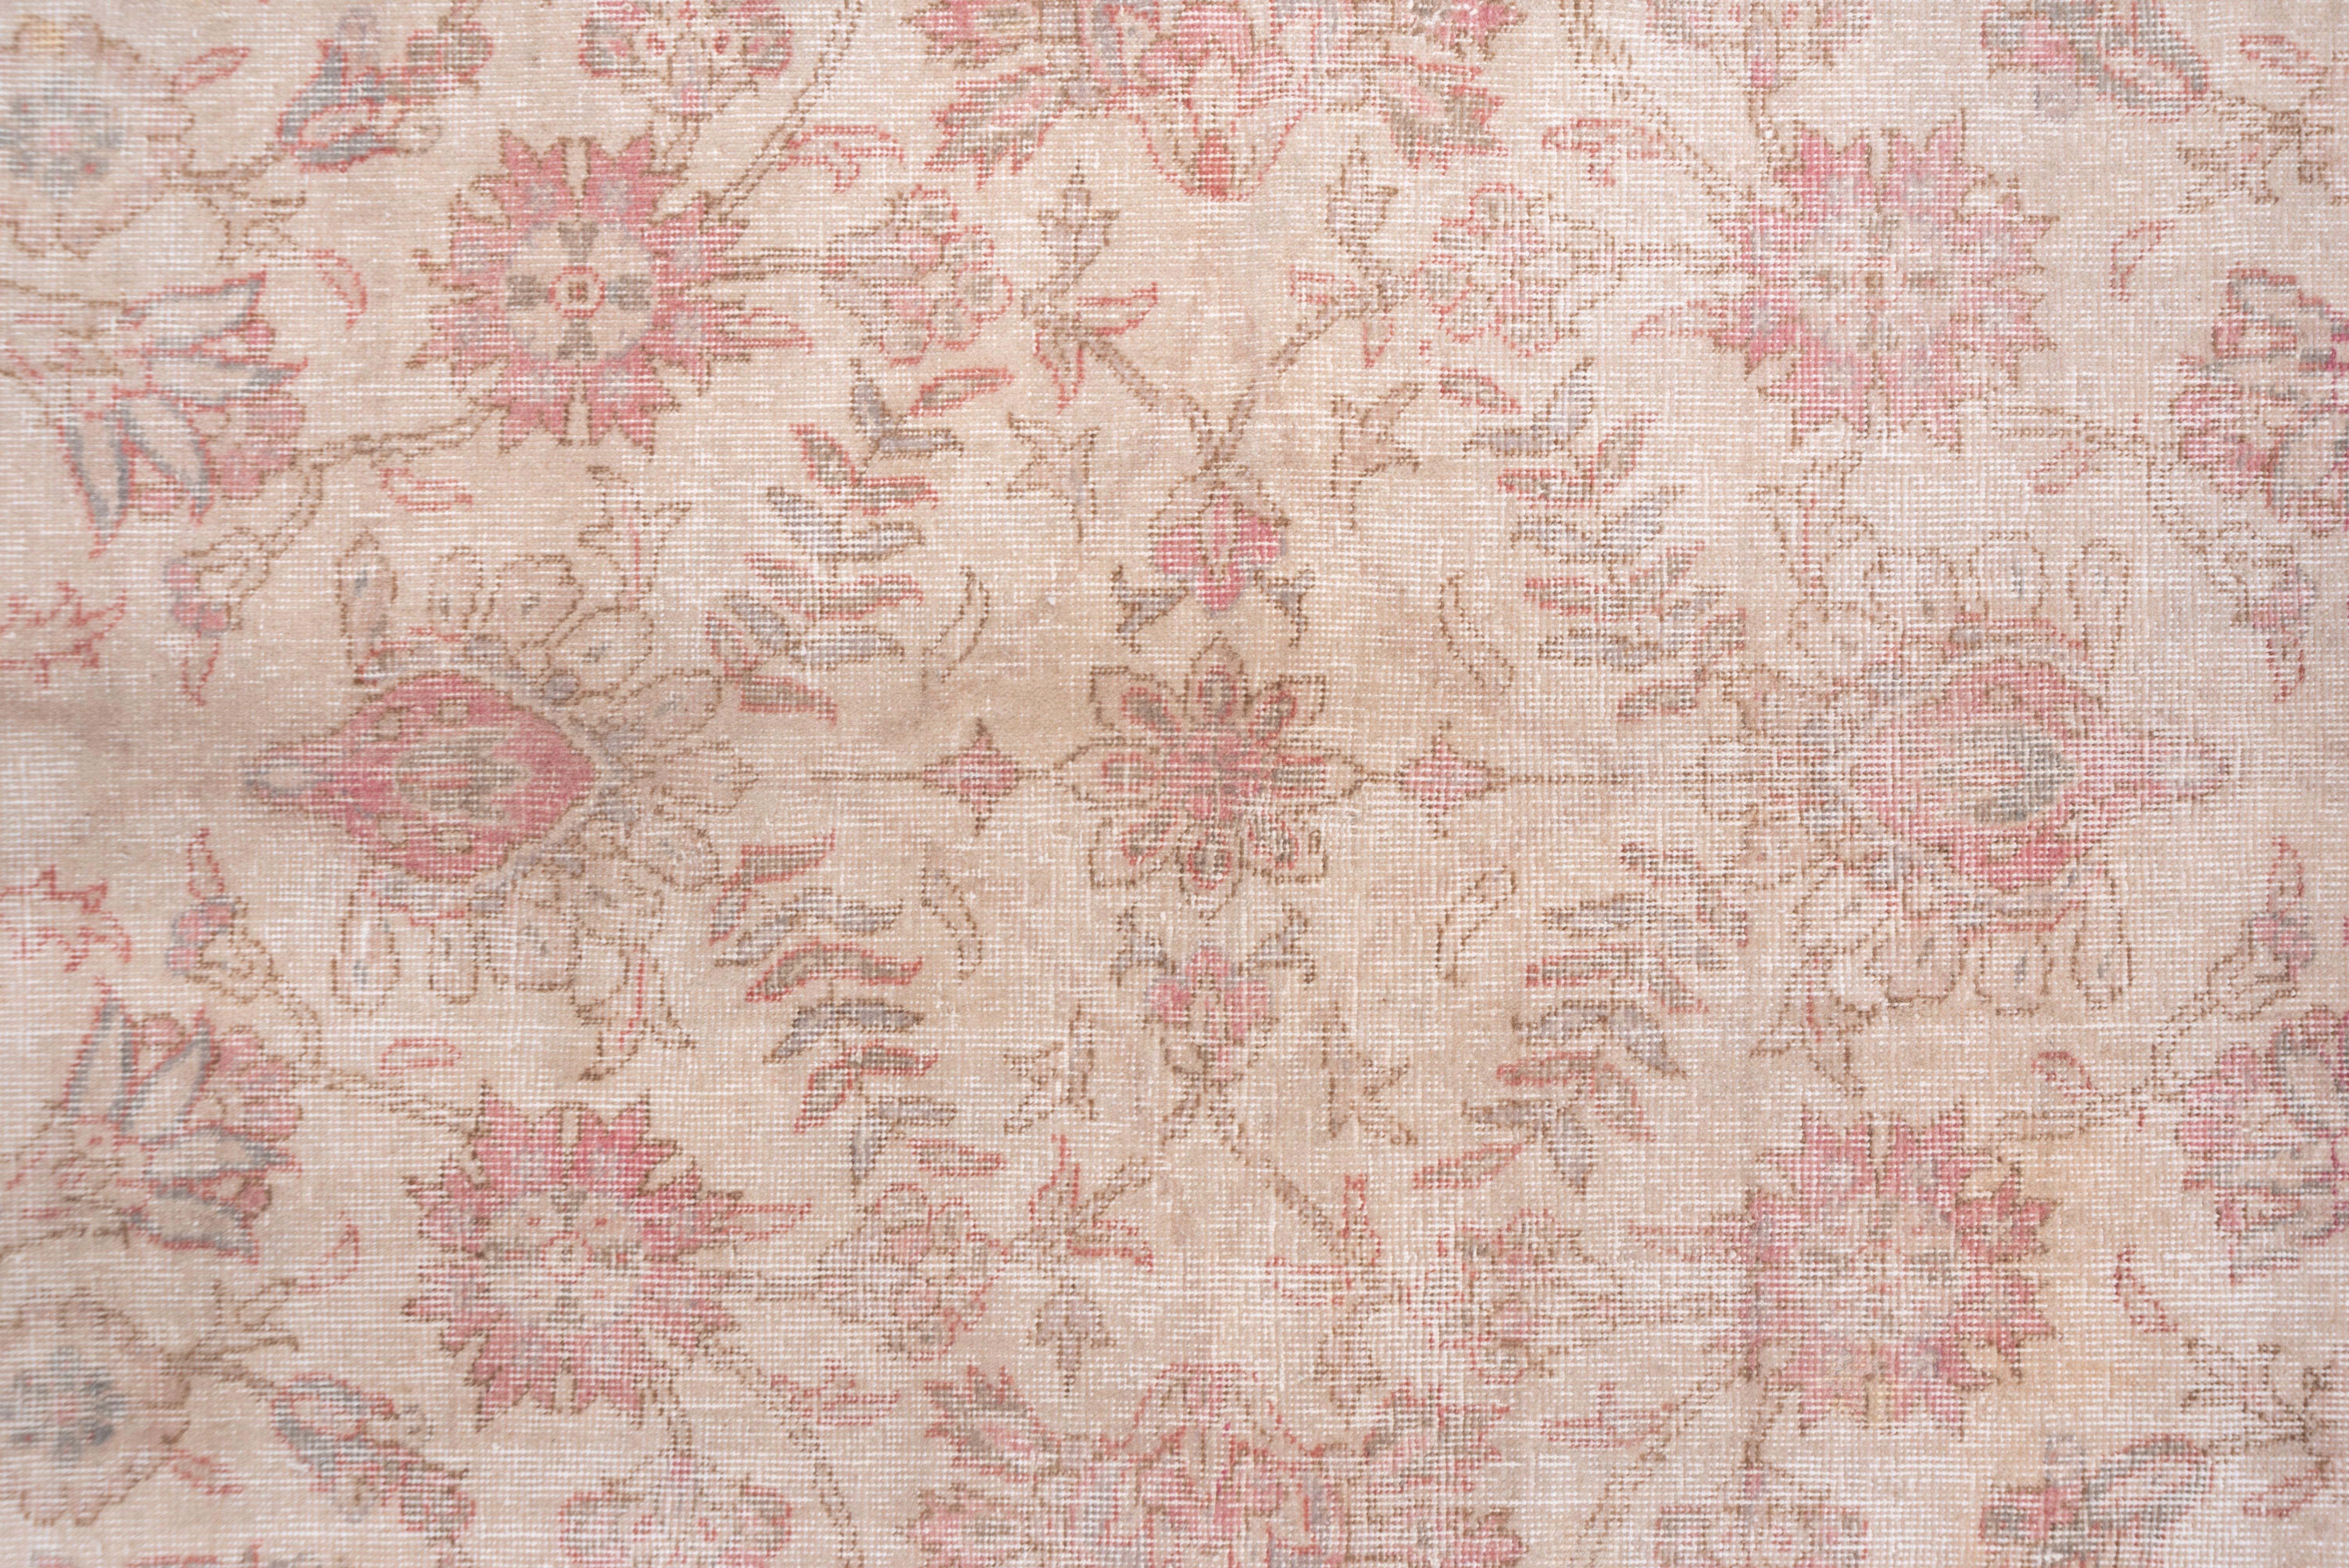 Turkish Ivory and Pink Oushak Carpet, Lightly Distressed